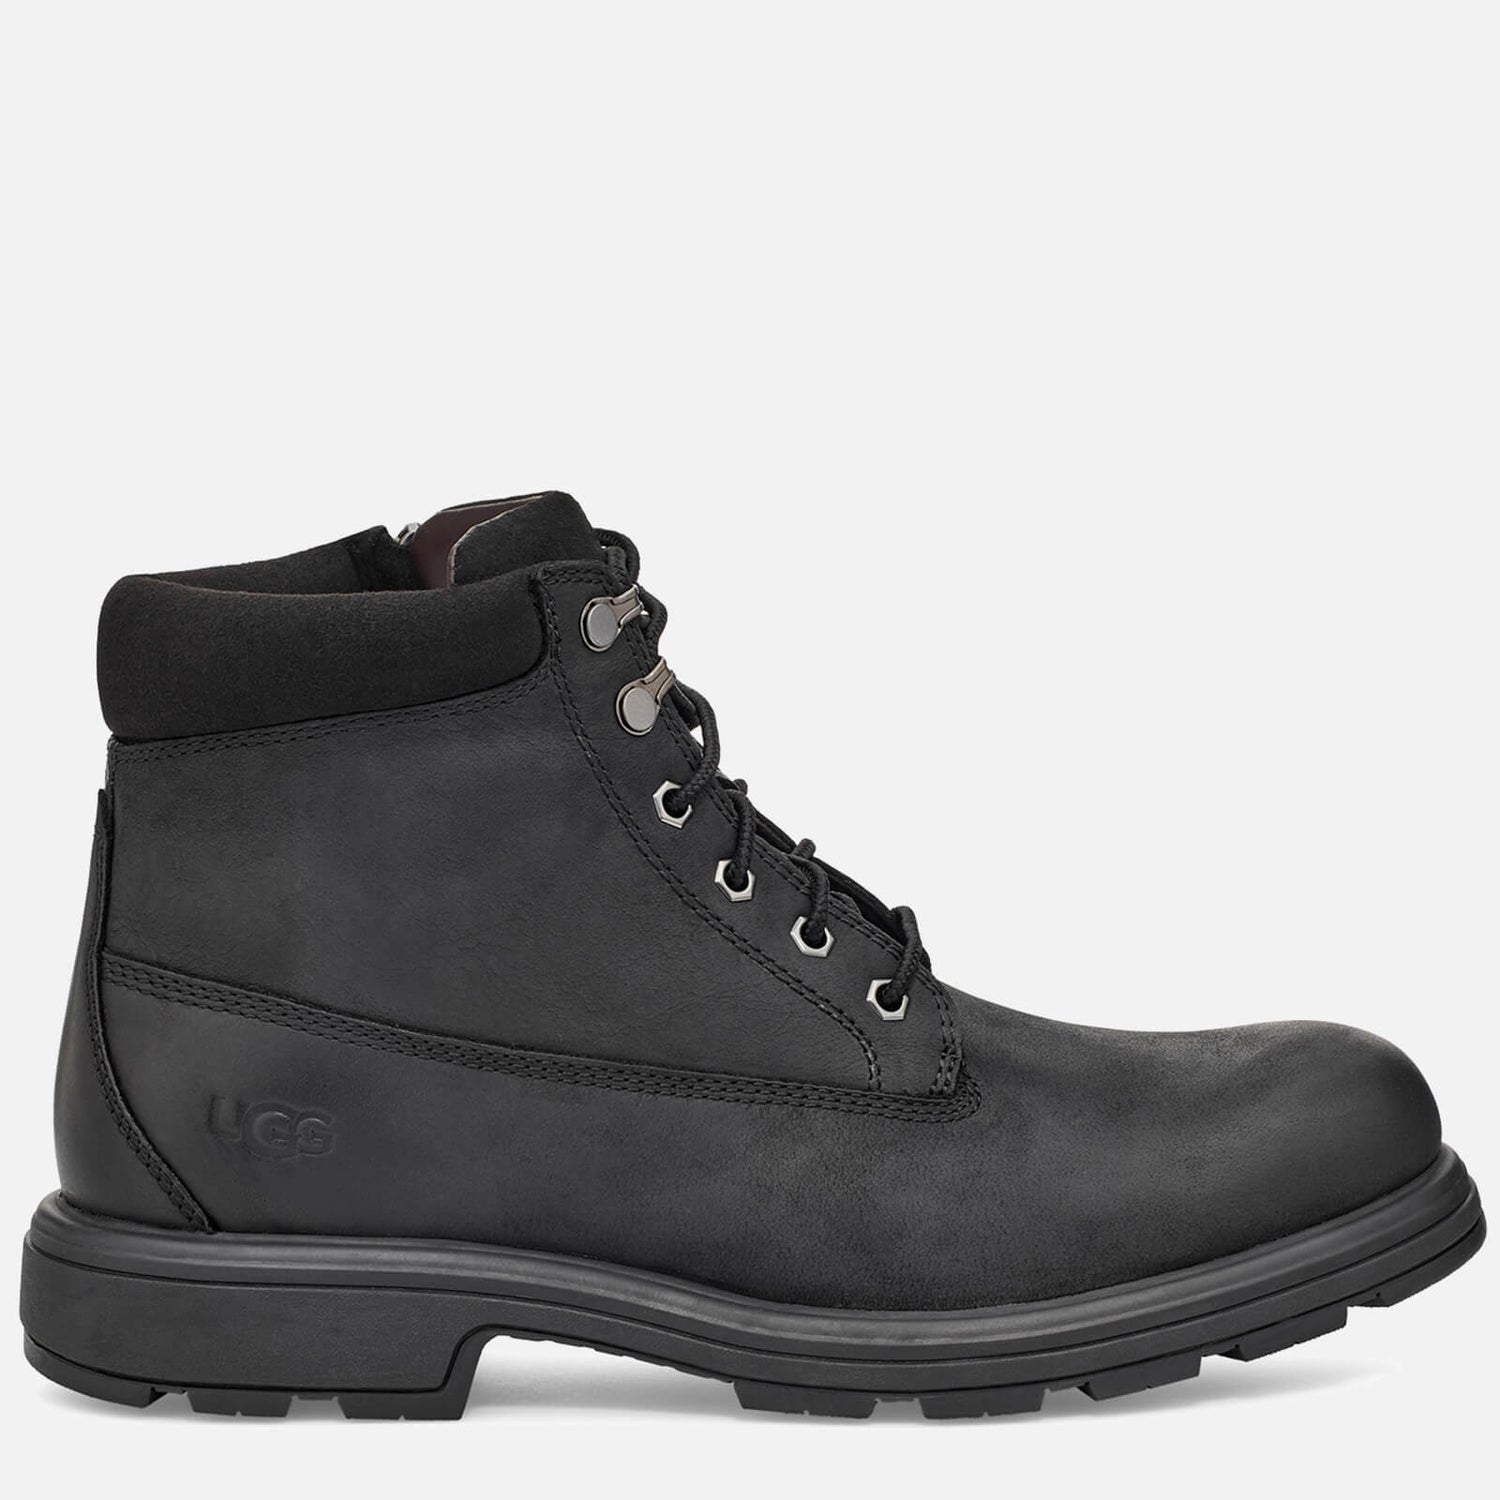 UGG Men's Biltmore Waterproof Leather Mid Boots - Black